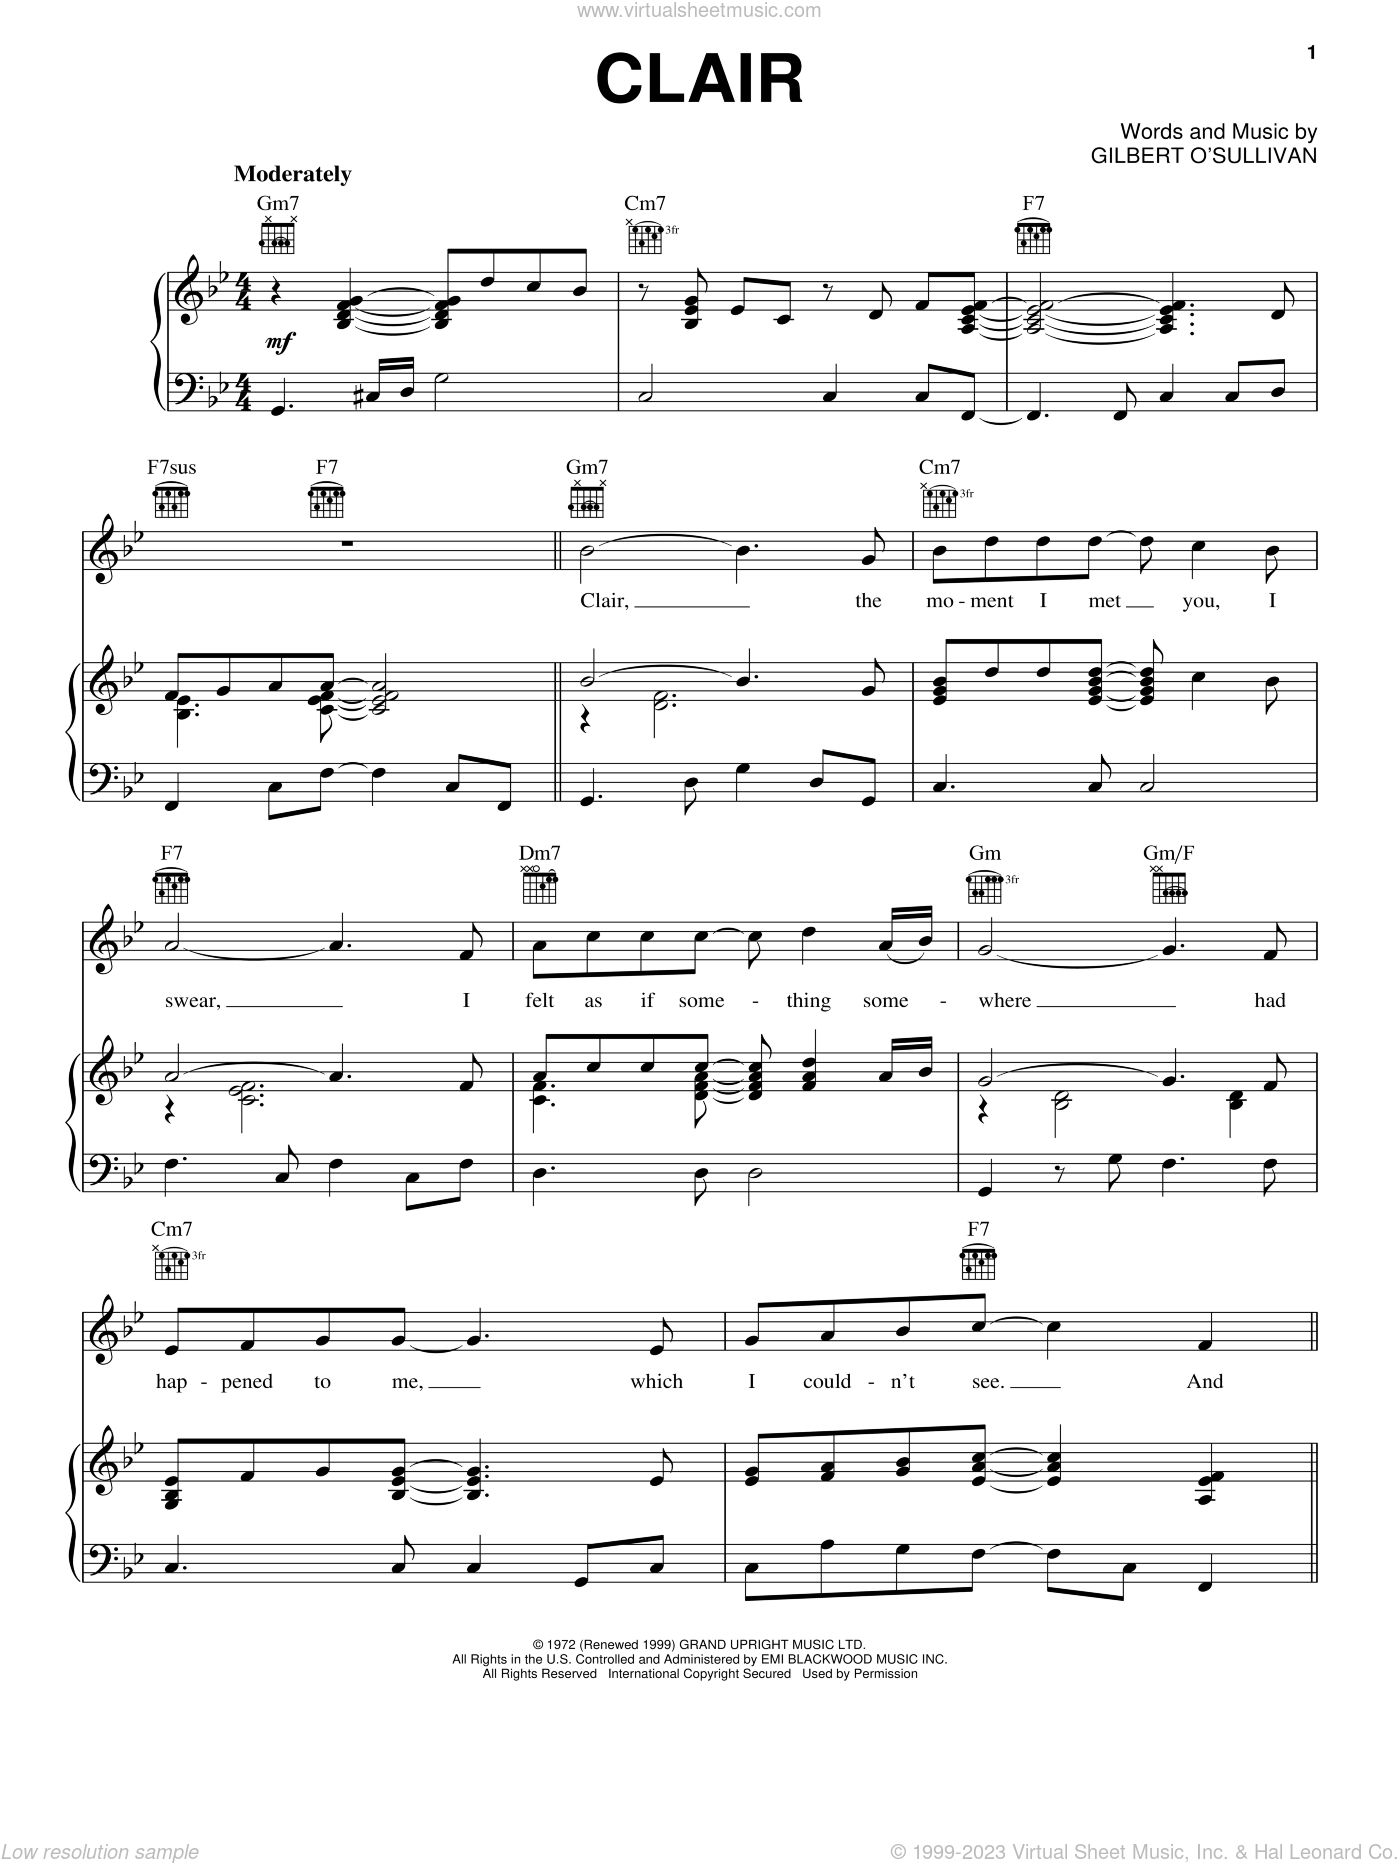 Gilbert O'Sullivan 'Alone Again (Naturally)' Sheet Music, Chords & Lyrics